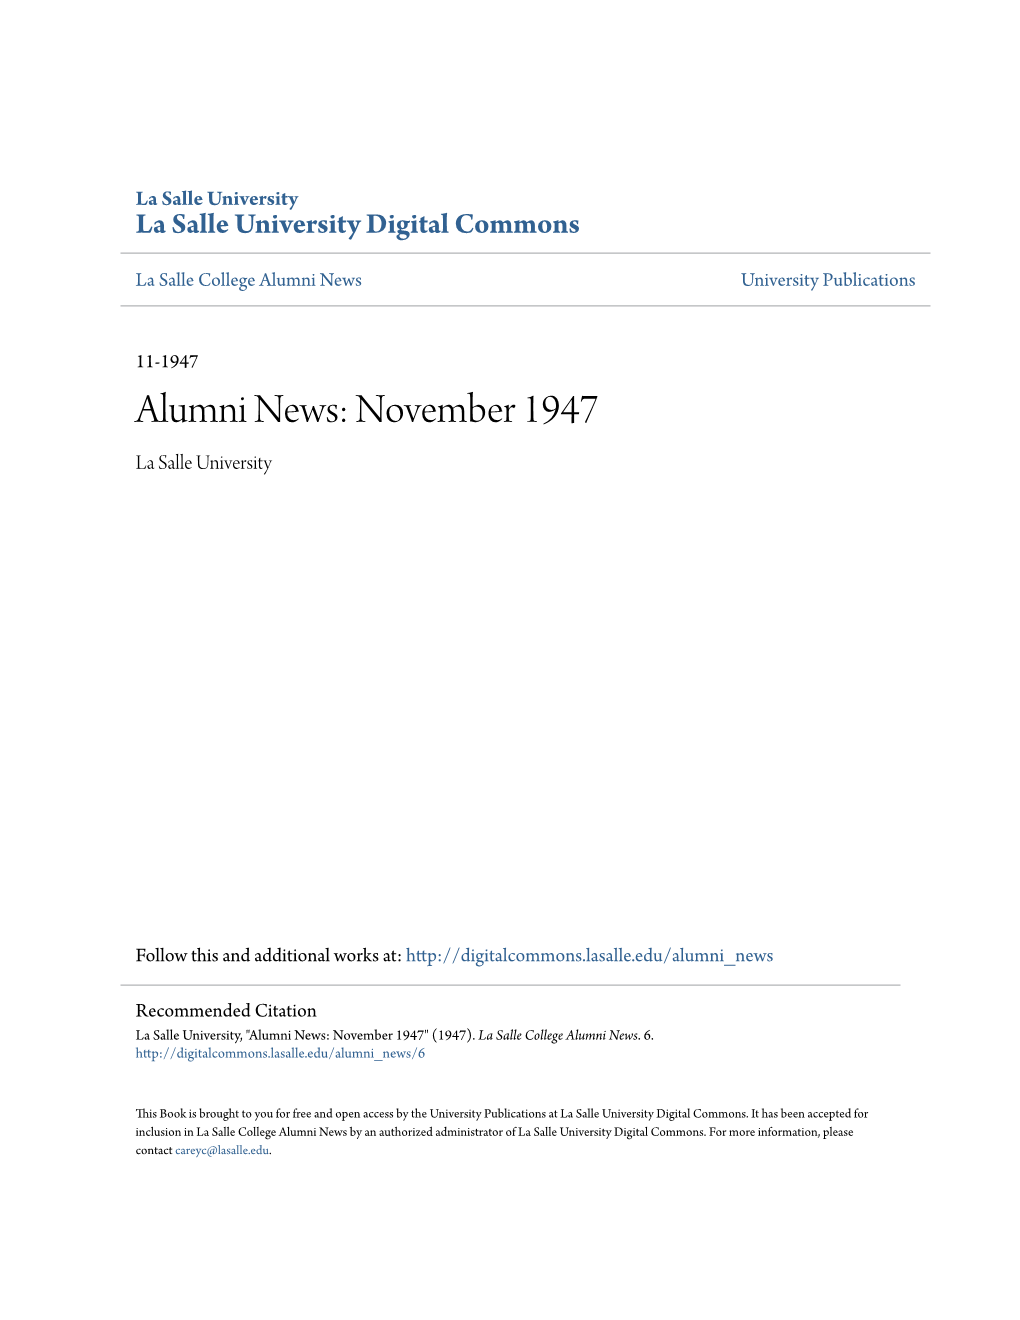 Alumni News: November 1947 La Salle University